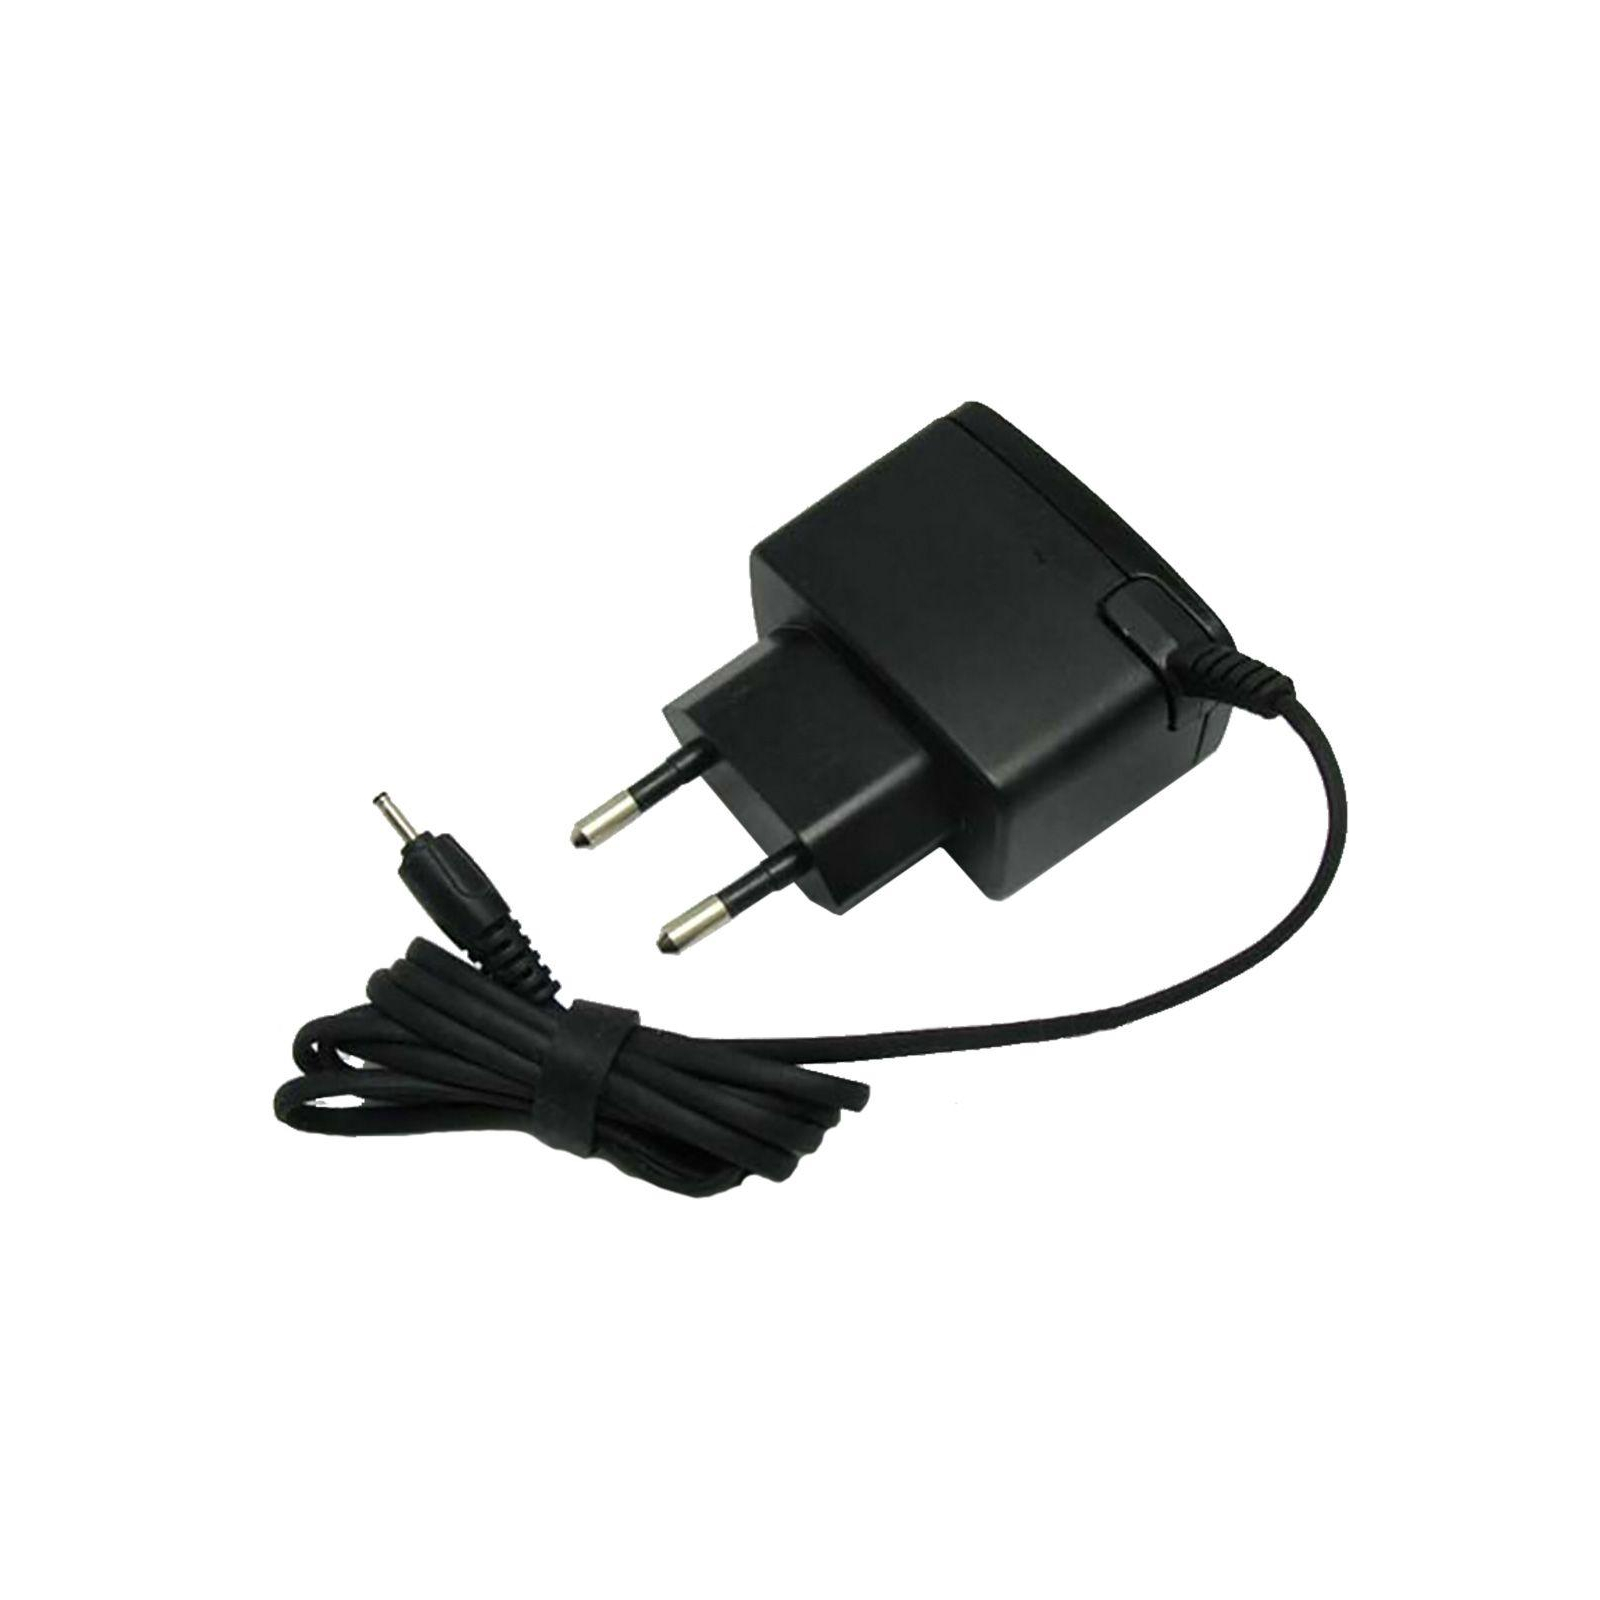 Зарядное устройство Toto TZH-52 Travel charger Nokia 6101 350 mA 1m Black (F_52799)